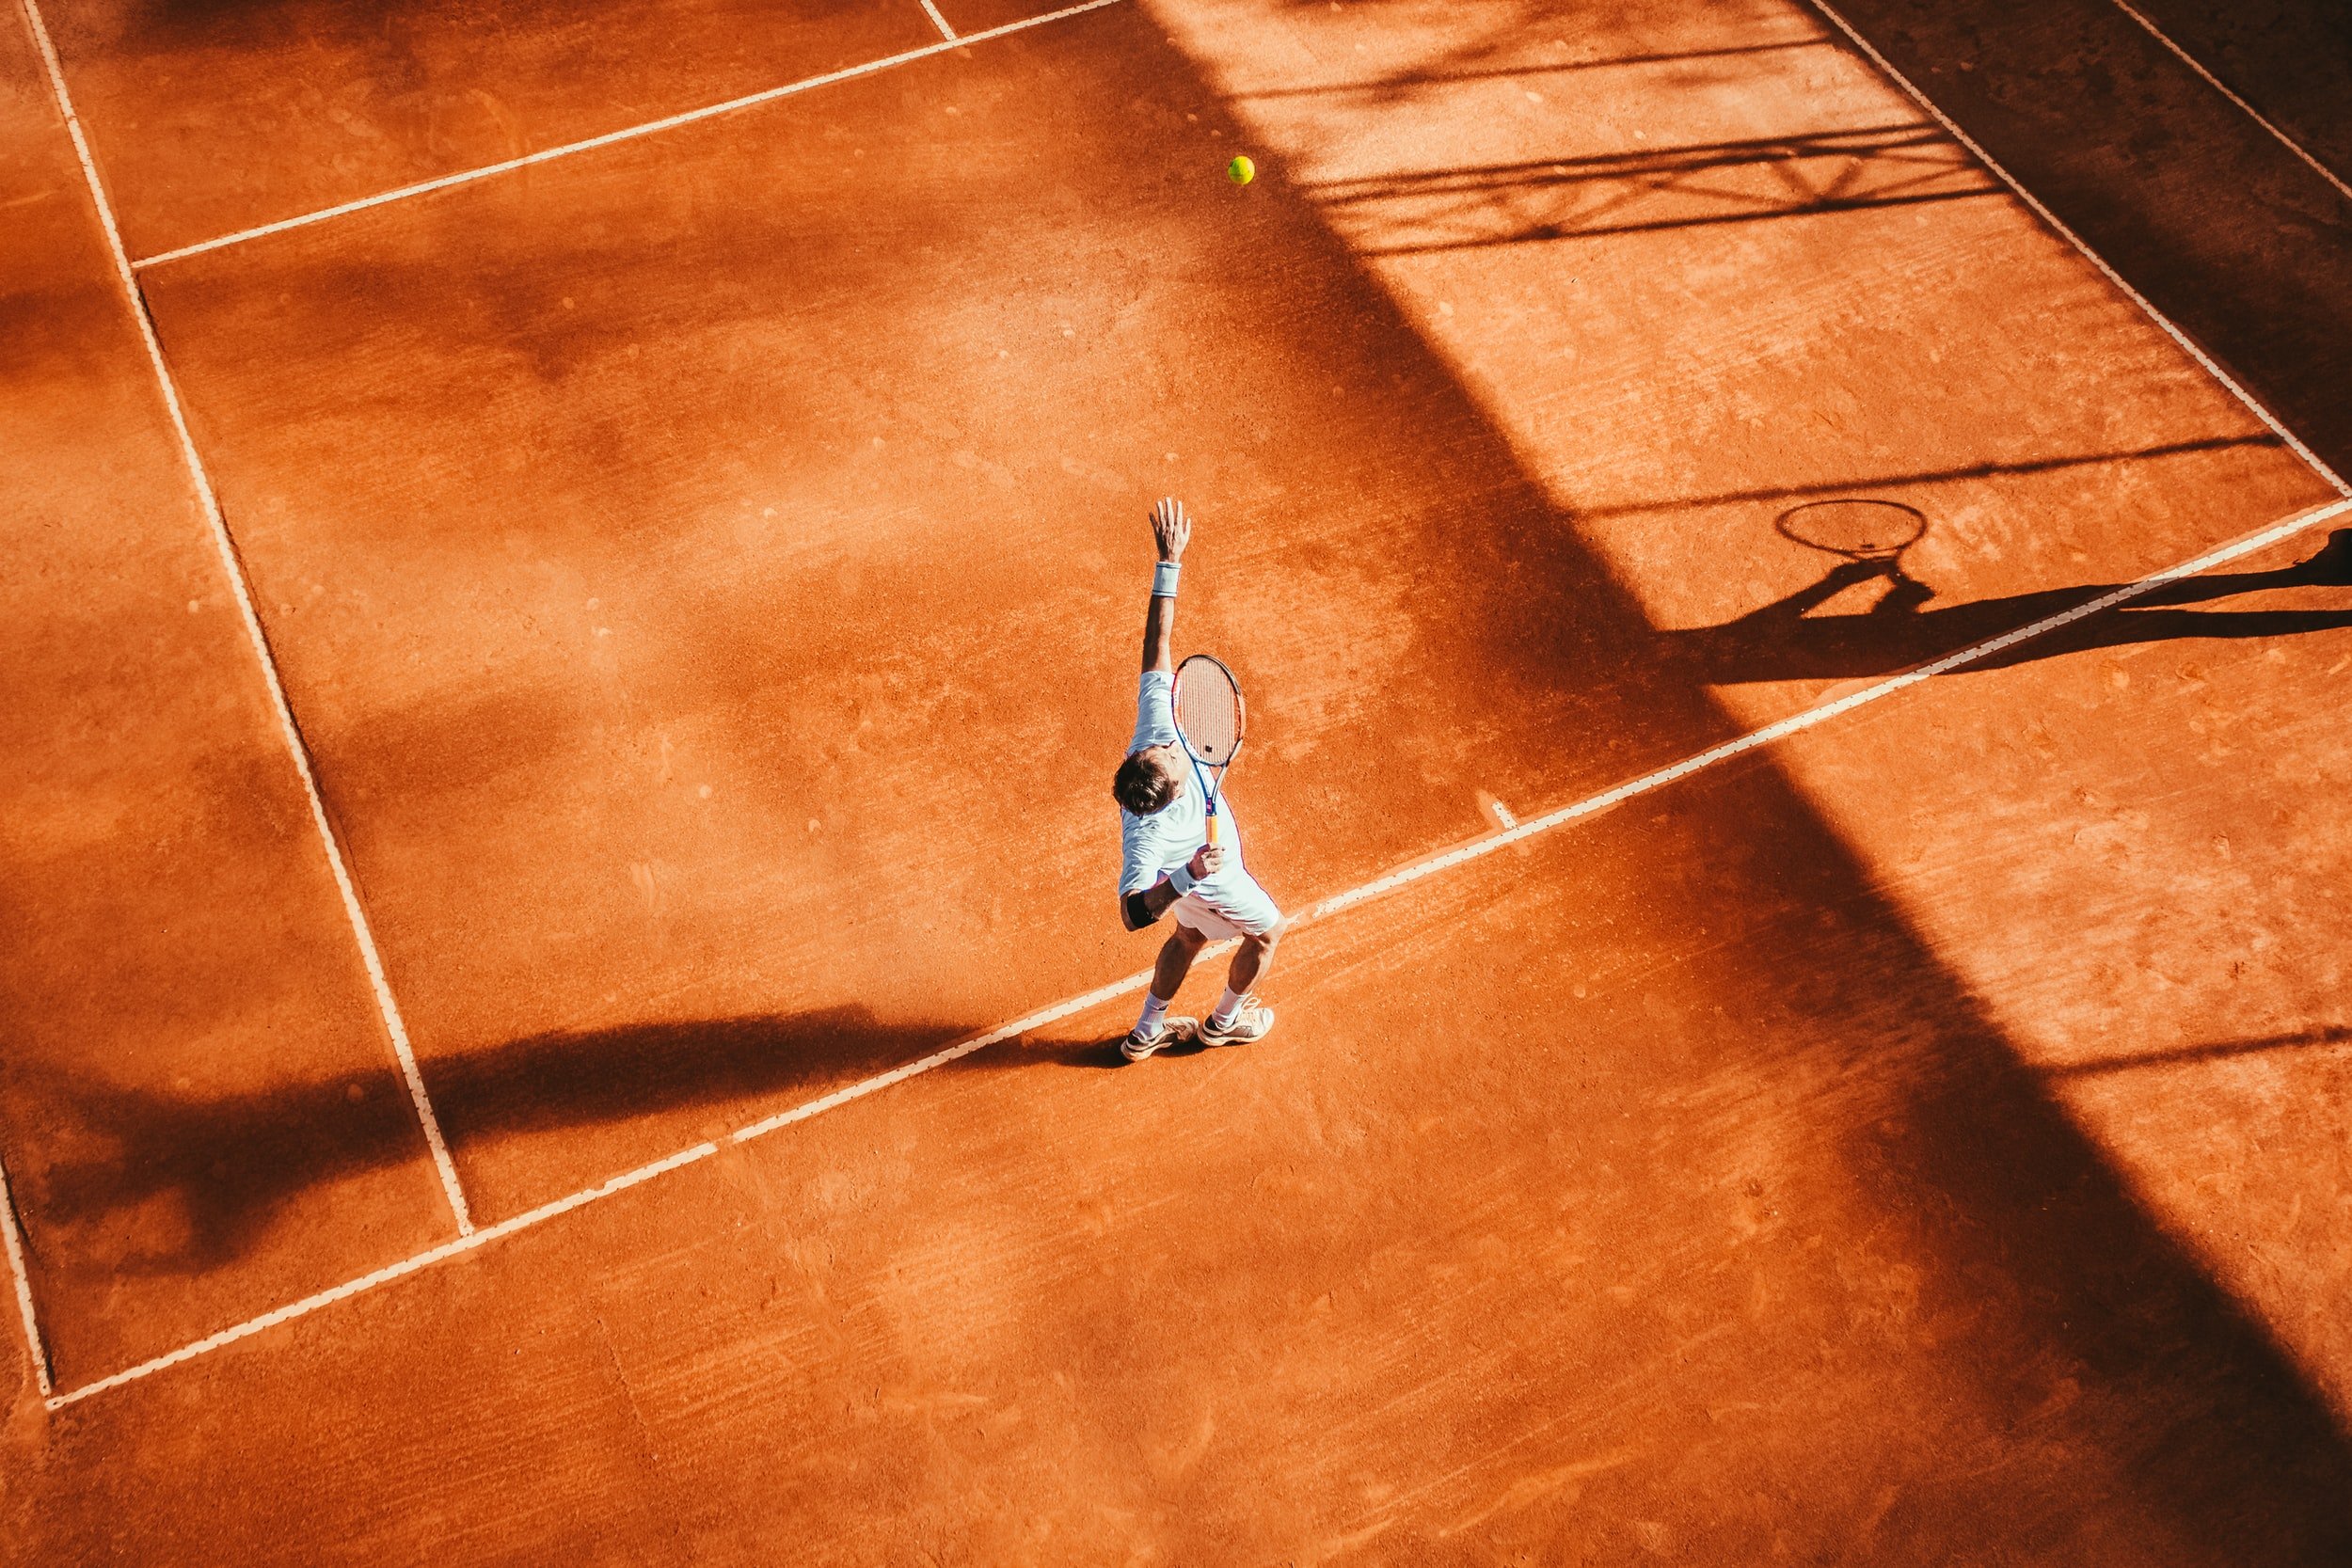 Tennis in a luxury Italian villa in Tuscany